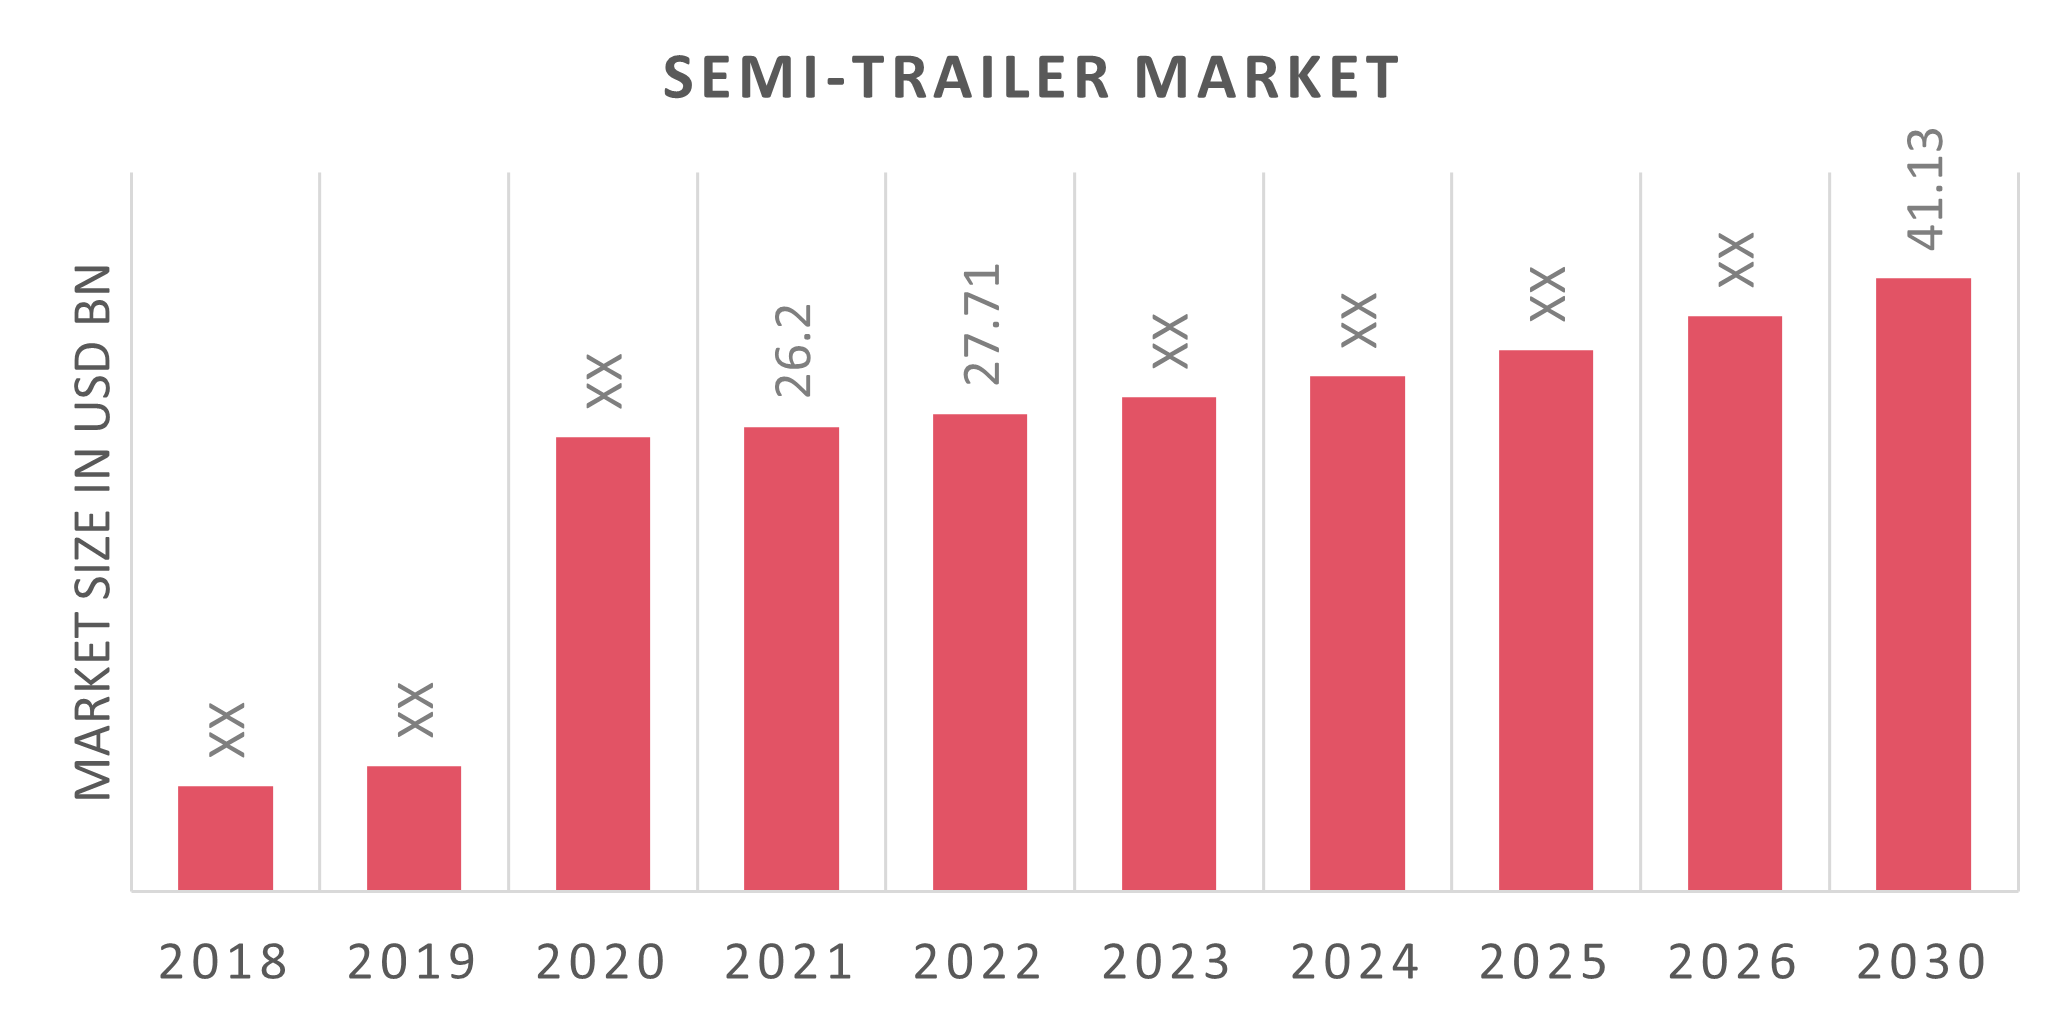 Global Semi-Trailer Market Overview